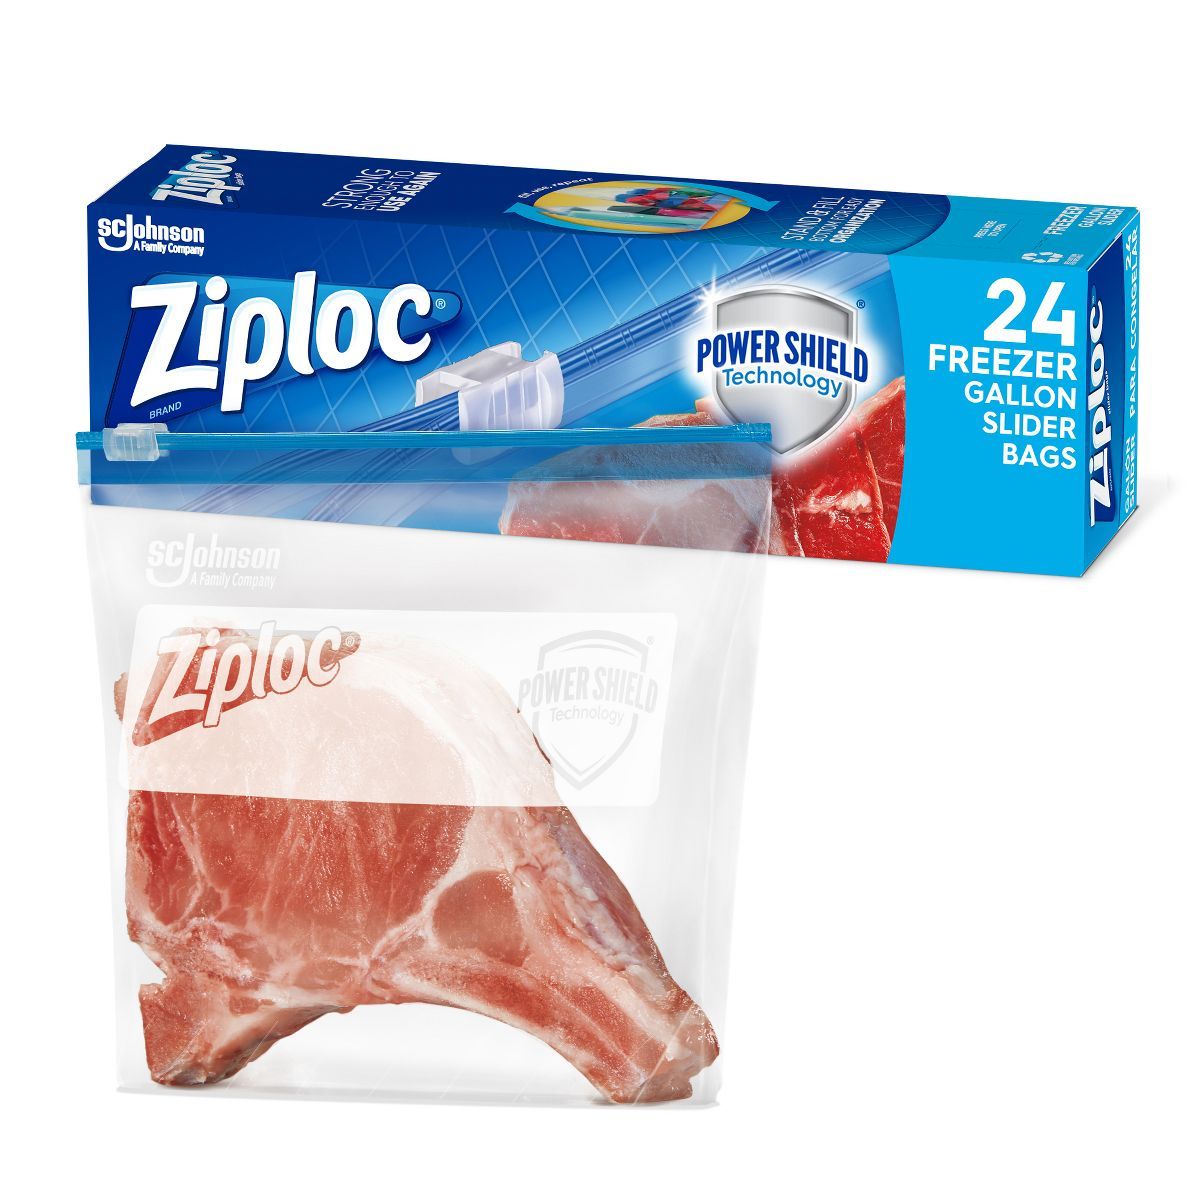 Ziploc Slider Freezer Gallon Bags with Power Shield Technology - 24ct | Target